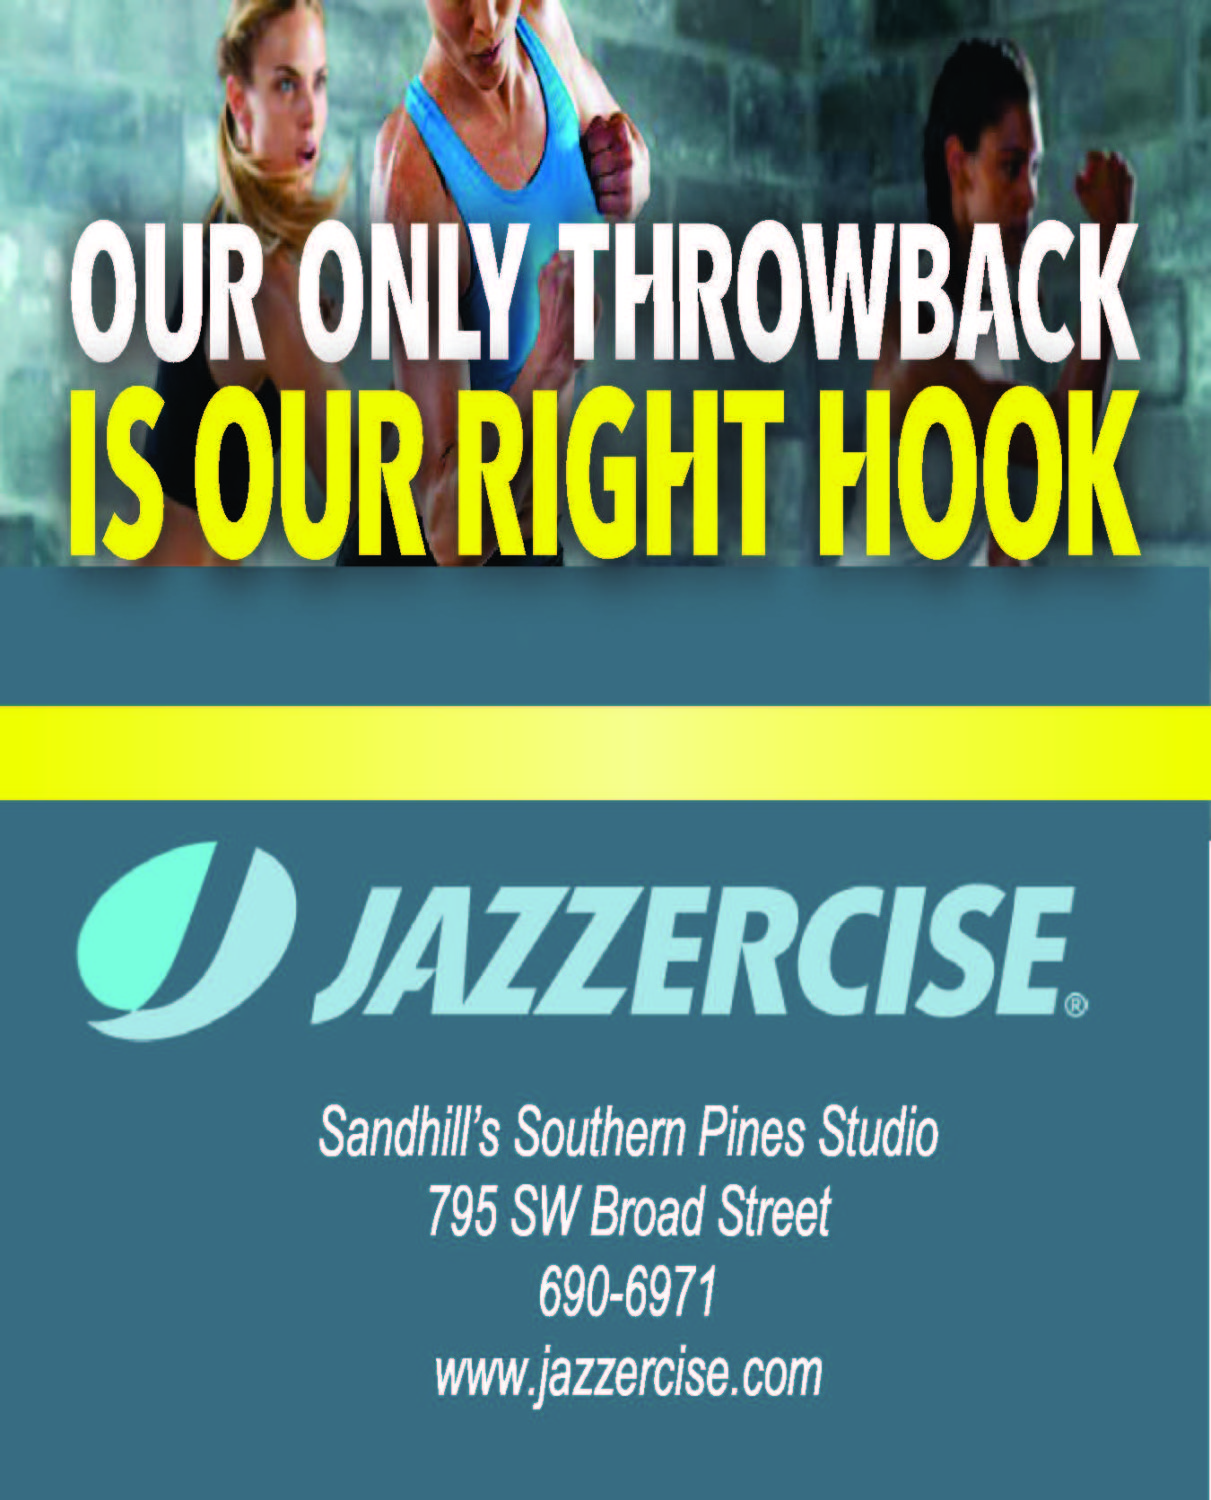 jazzercise-logo - Prancing Horse Center